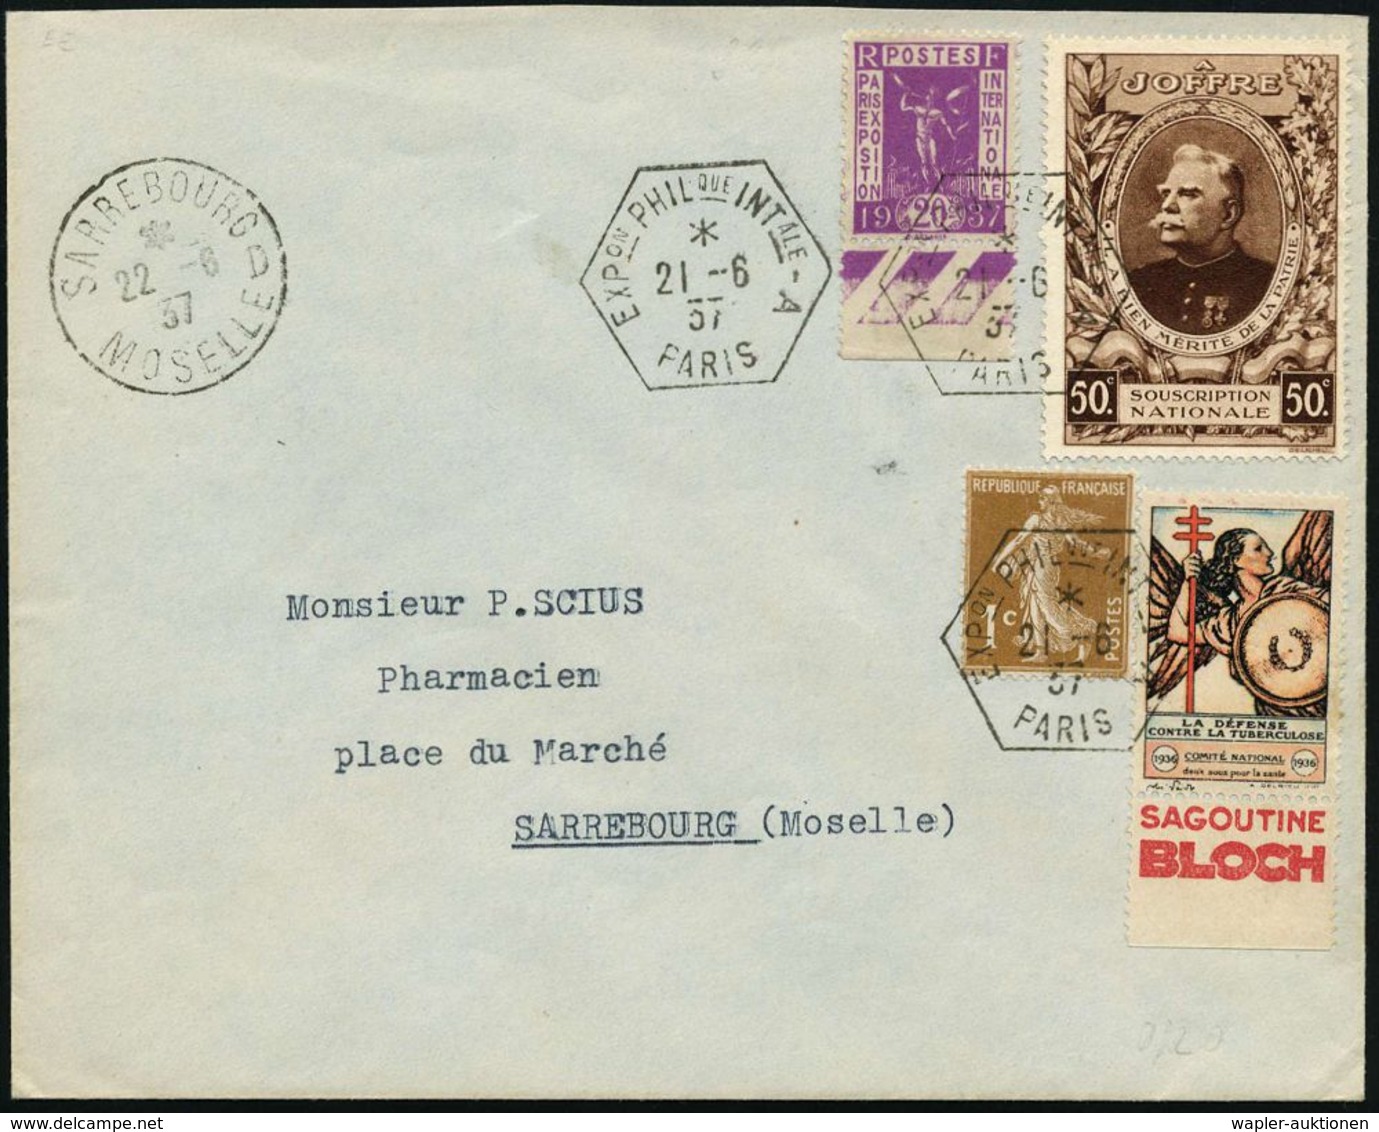 TUBERKULOSE / TBC-VORSORGE : FRANKREICH 1937 (21.6.) SSt: PARIS/EXPon PHILque INTale-A Auf Tbc-Spendenmarke 1936 (Allego - Maladies